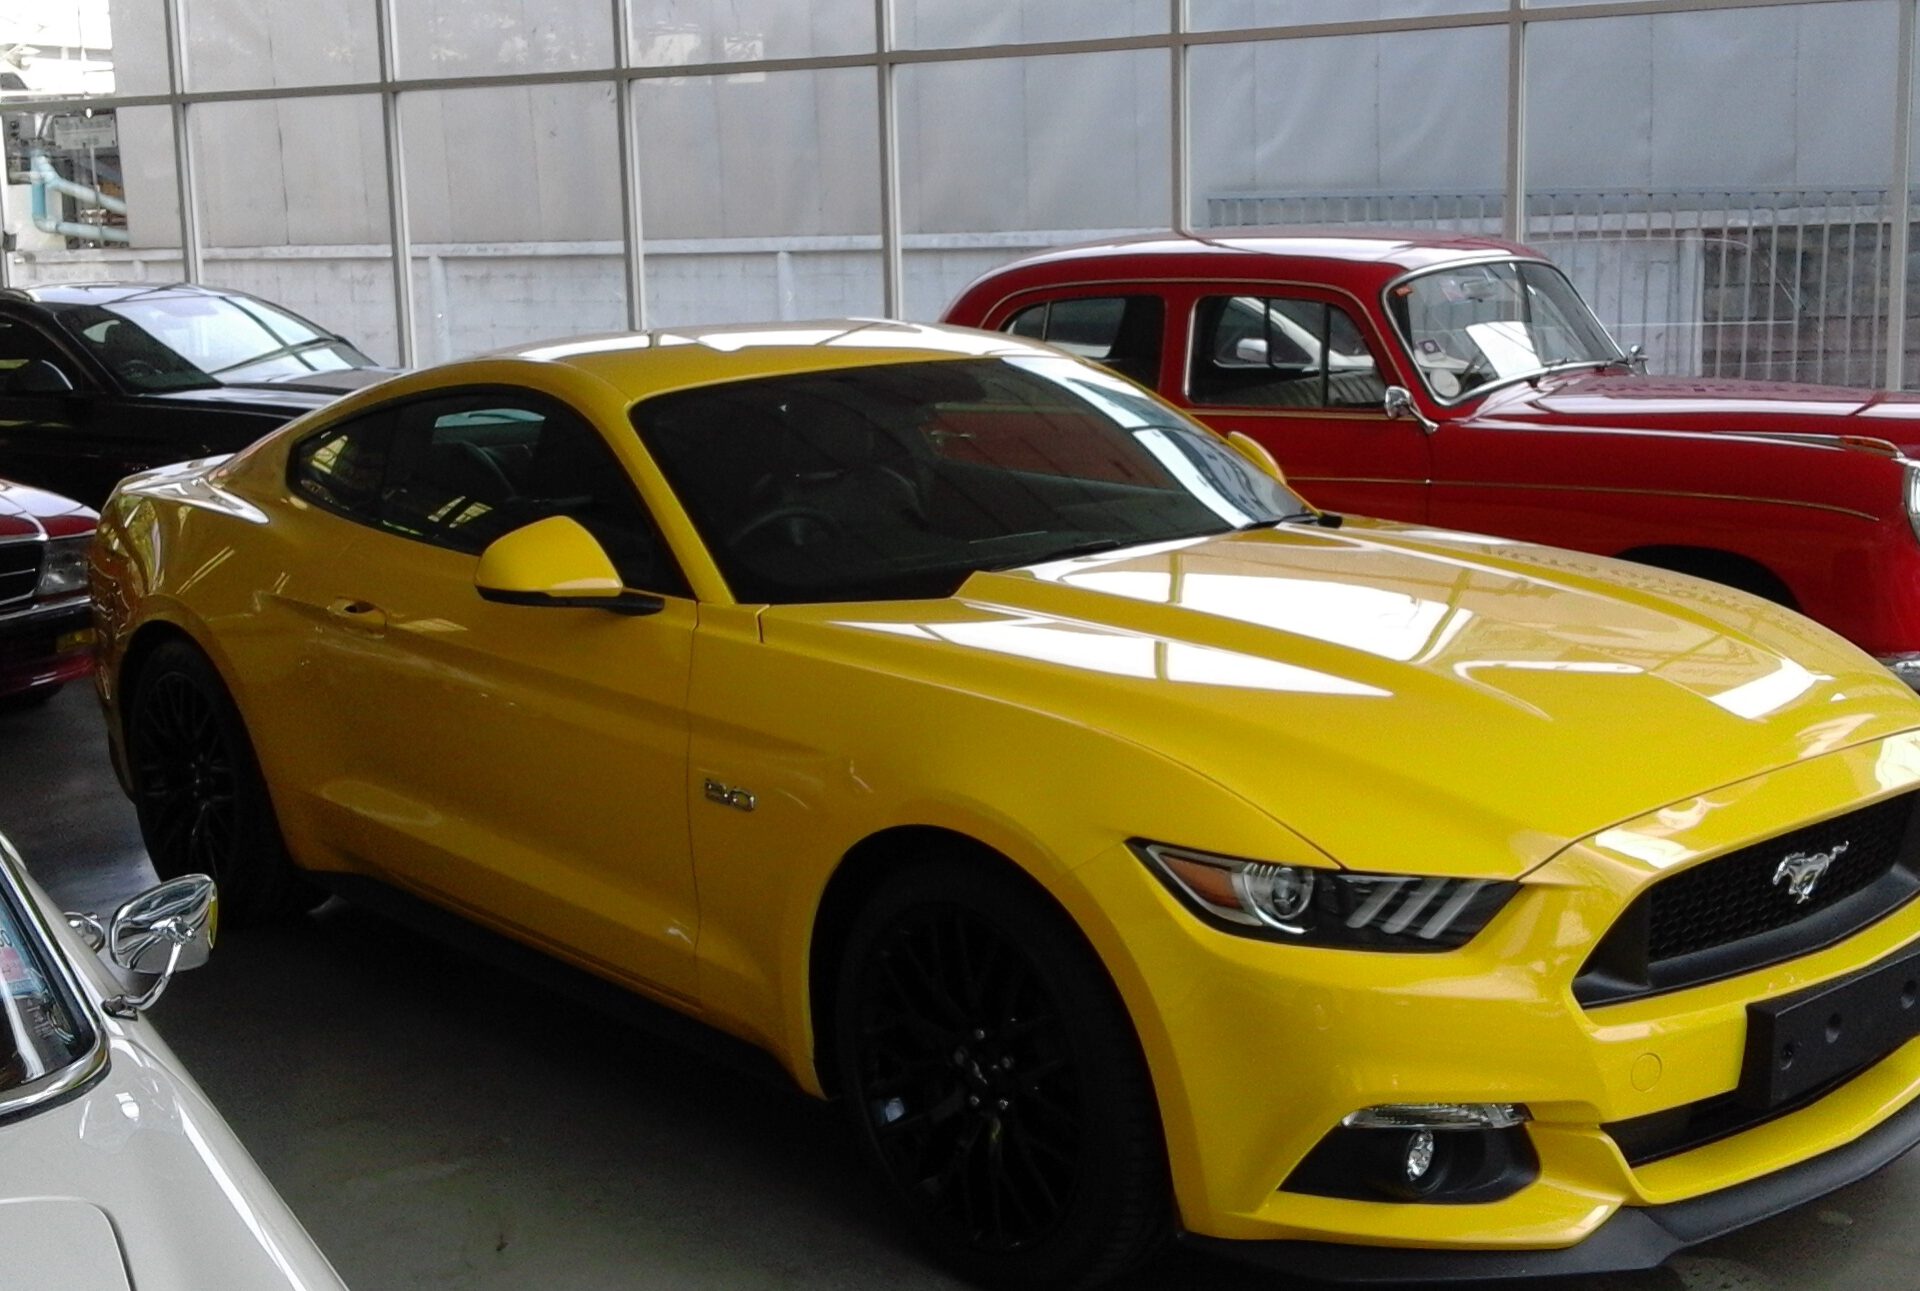 Der gelbe Mustang